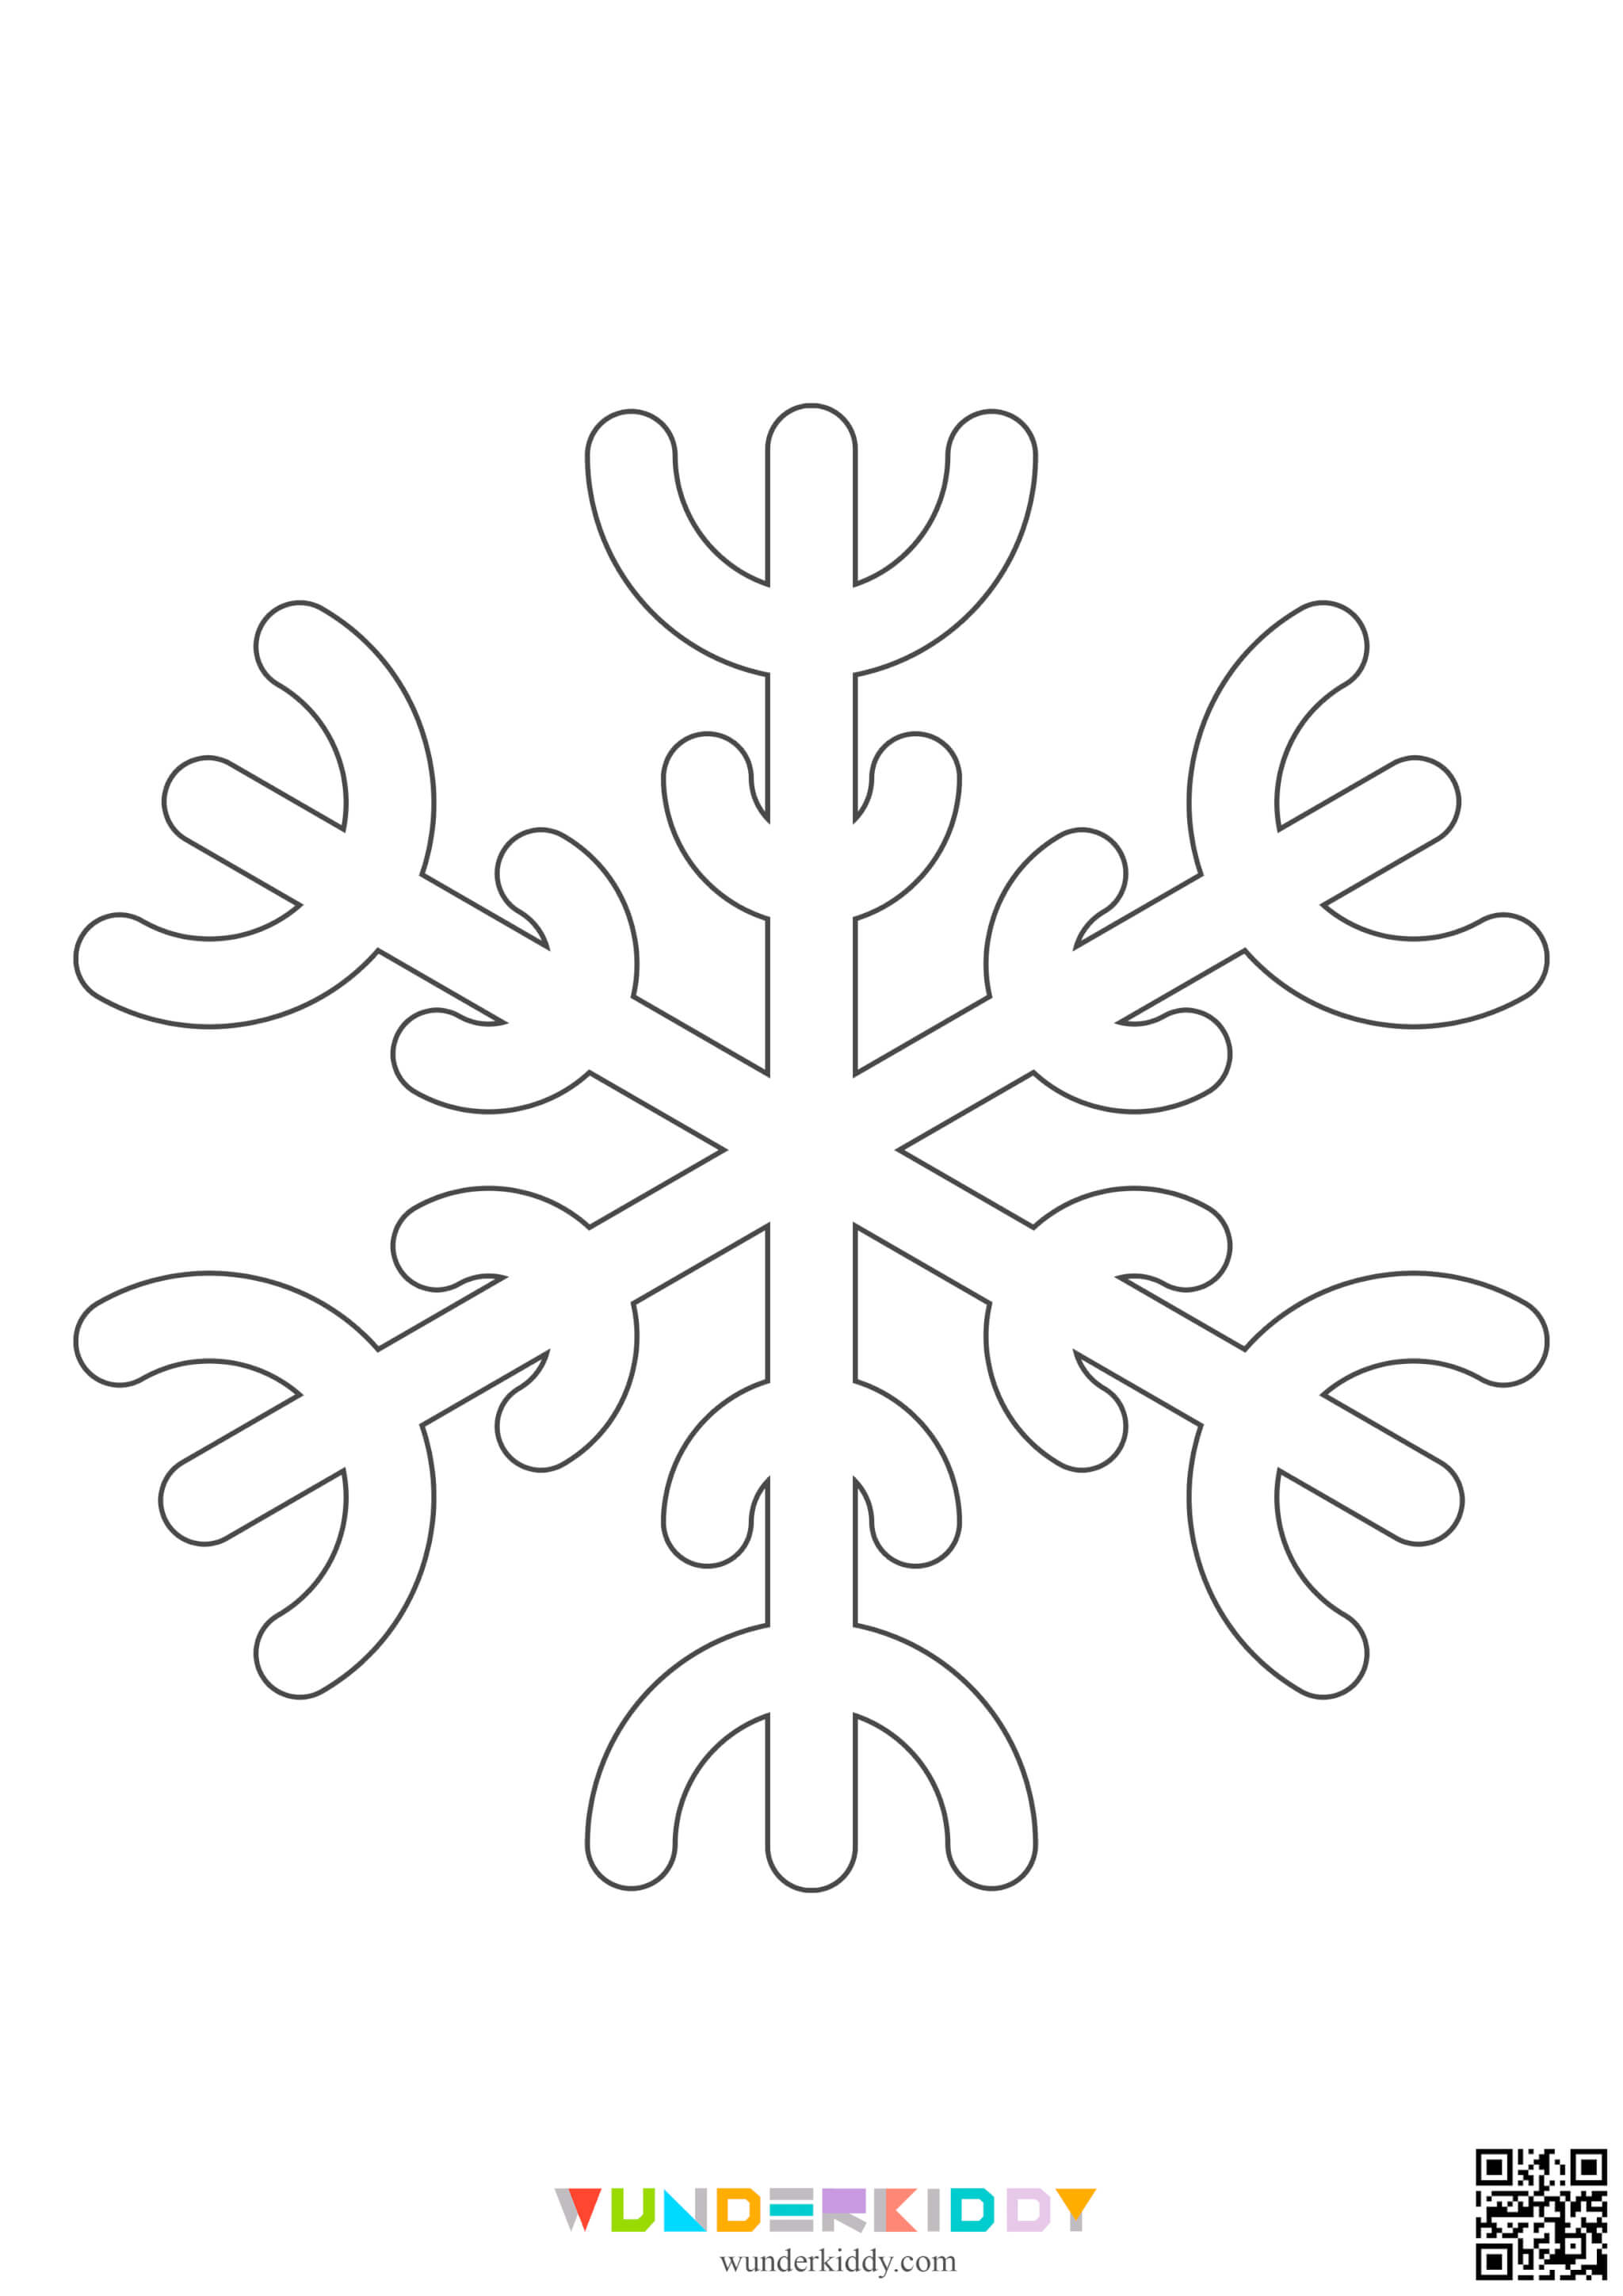 Snowflake Stencil Patterns - Image 7